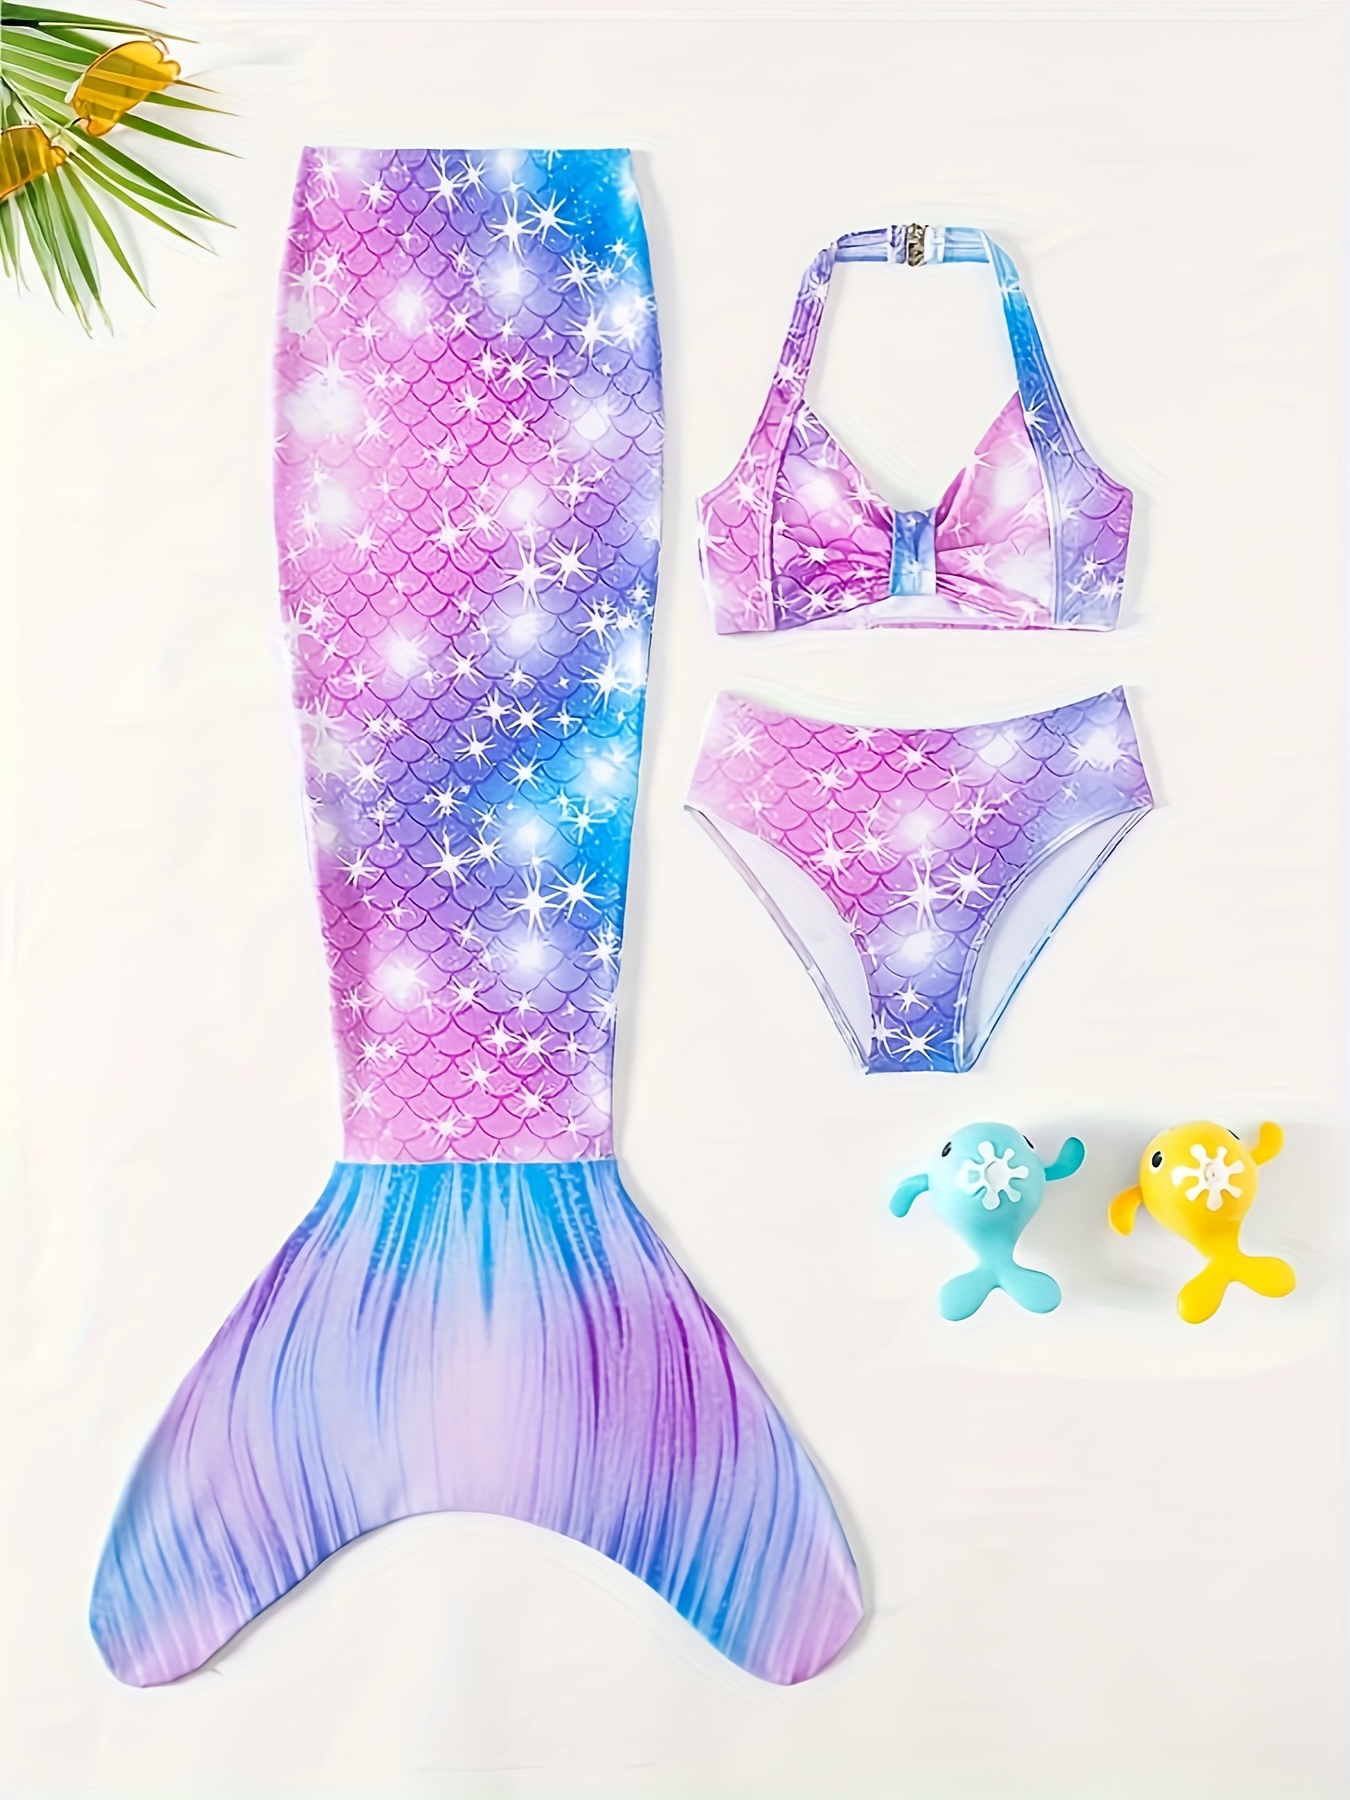 Stylish Mermaid Swimsuit Set Girls 3pcs Halter Neck Top + Briefs + Mermaid Tail Set F Or Summer Beachwear Bathing Suit